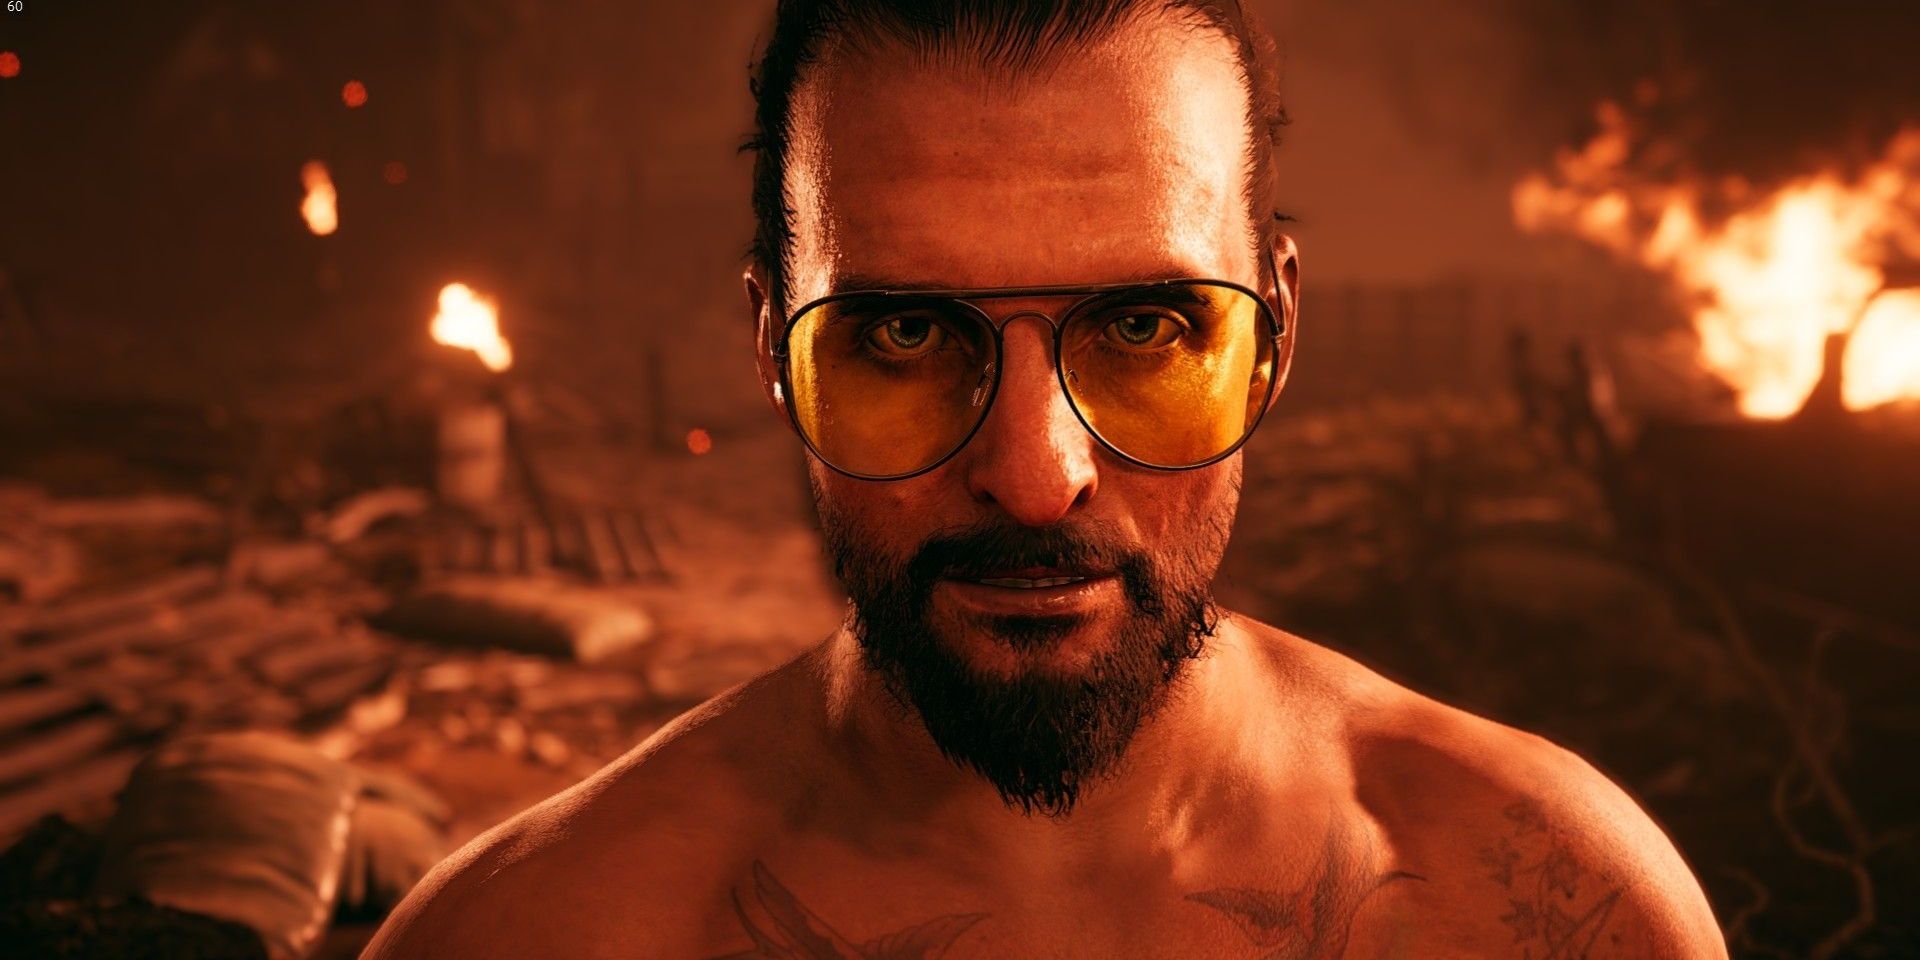 Joseph Seed, Far Cry 5's main villain